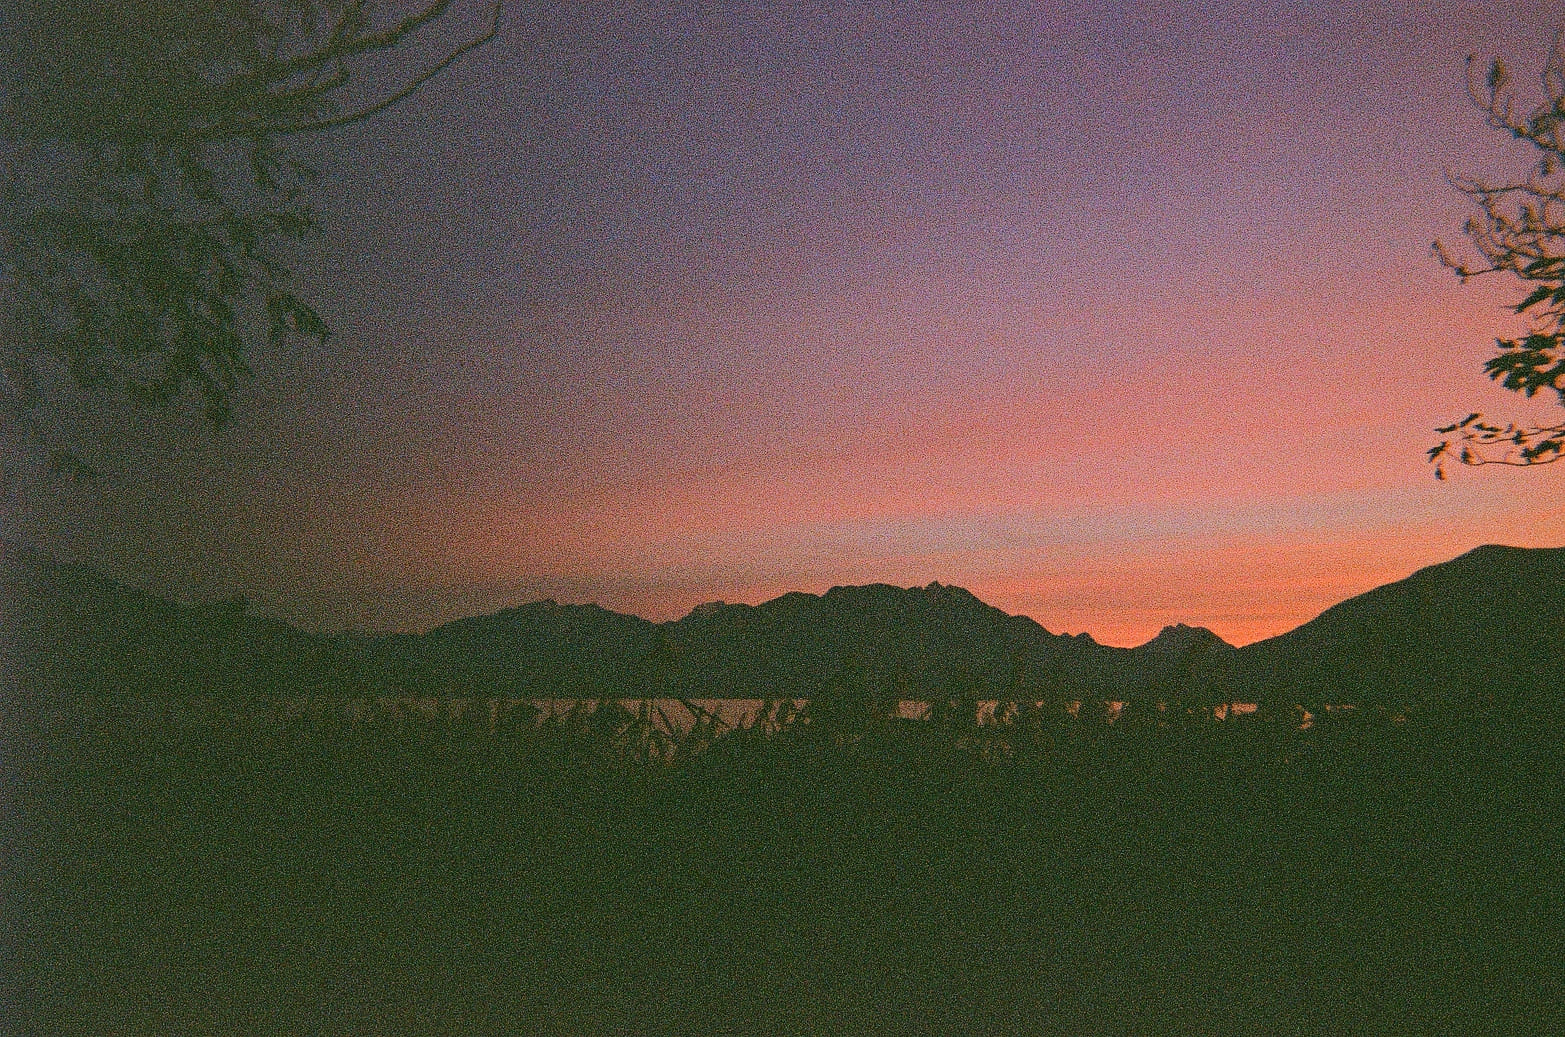 Margaux de fouchier Annecy sunset